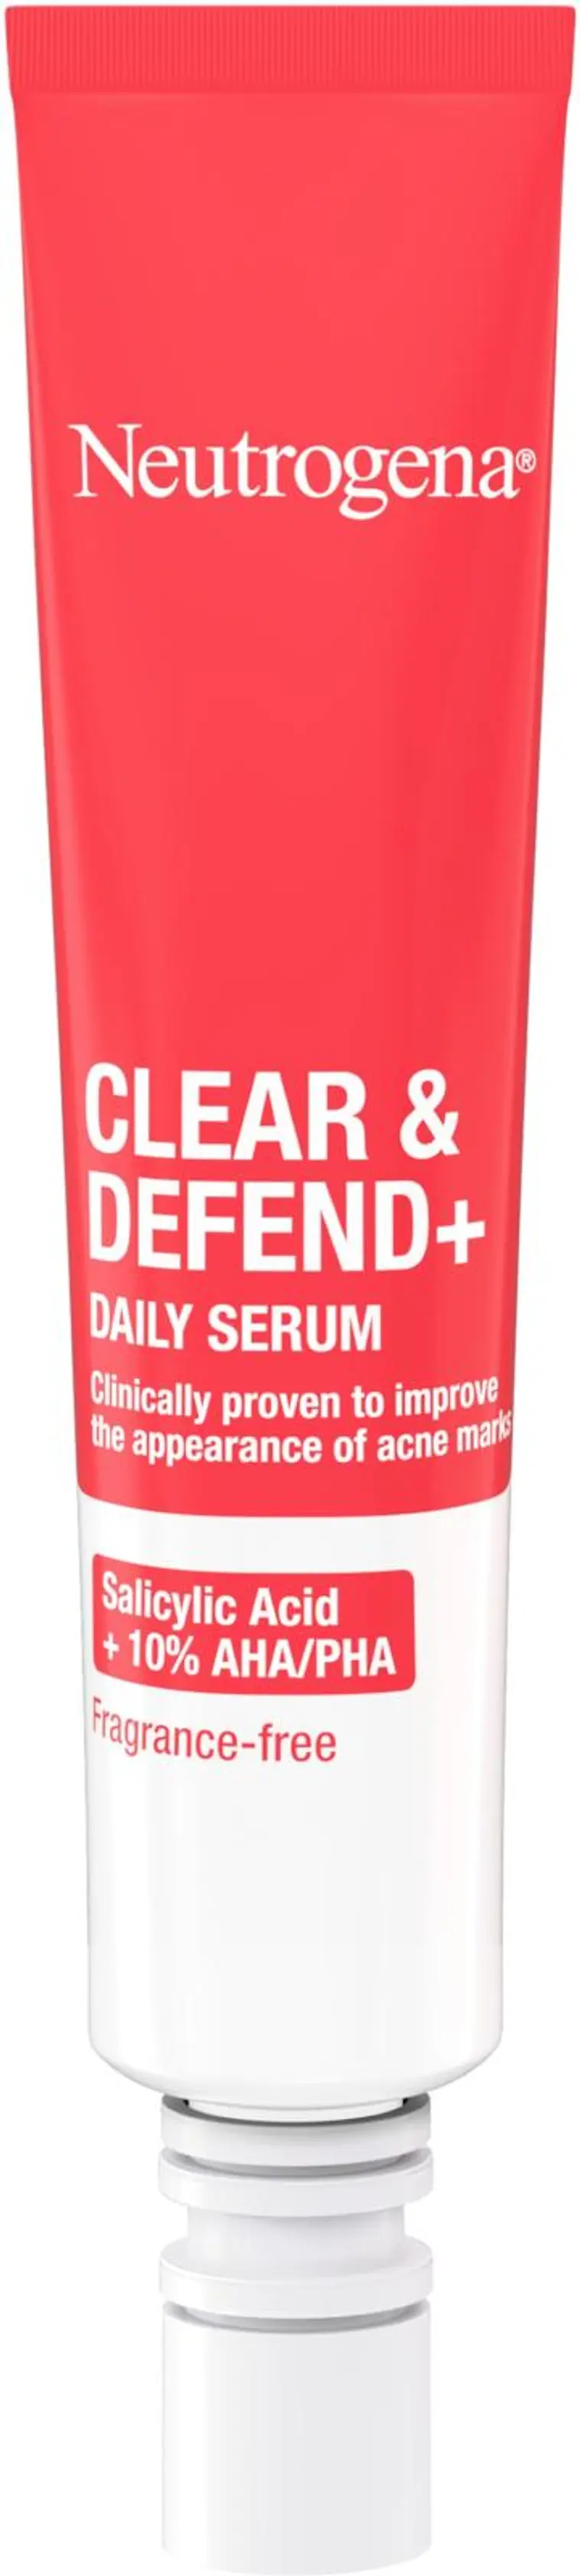 Neutrogena Clear & Defend+ Daily Serum kasvoseerumi 30 ml | Prisma  verkkokauppa